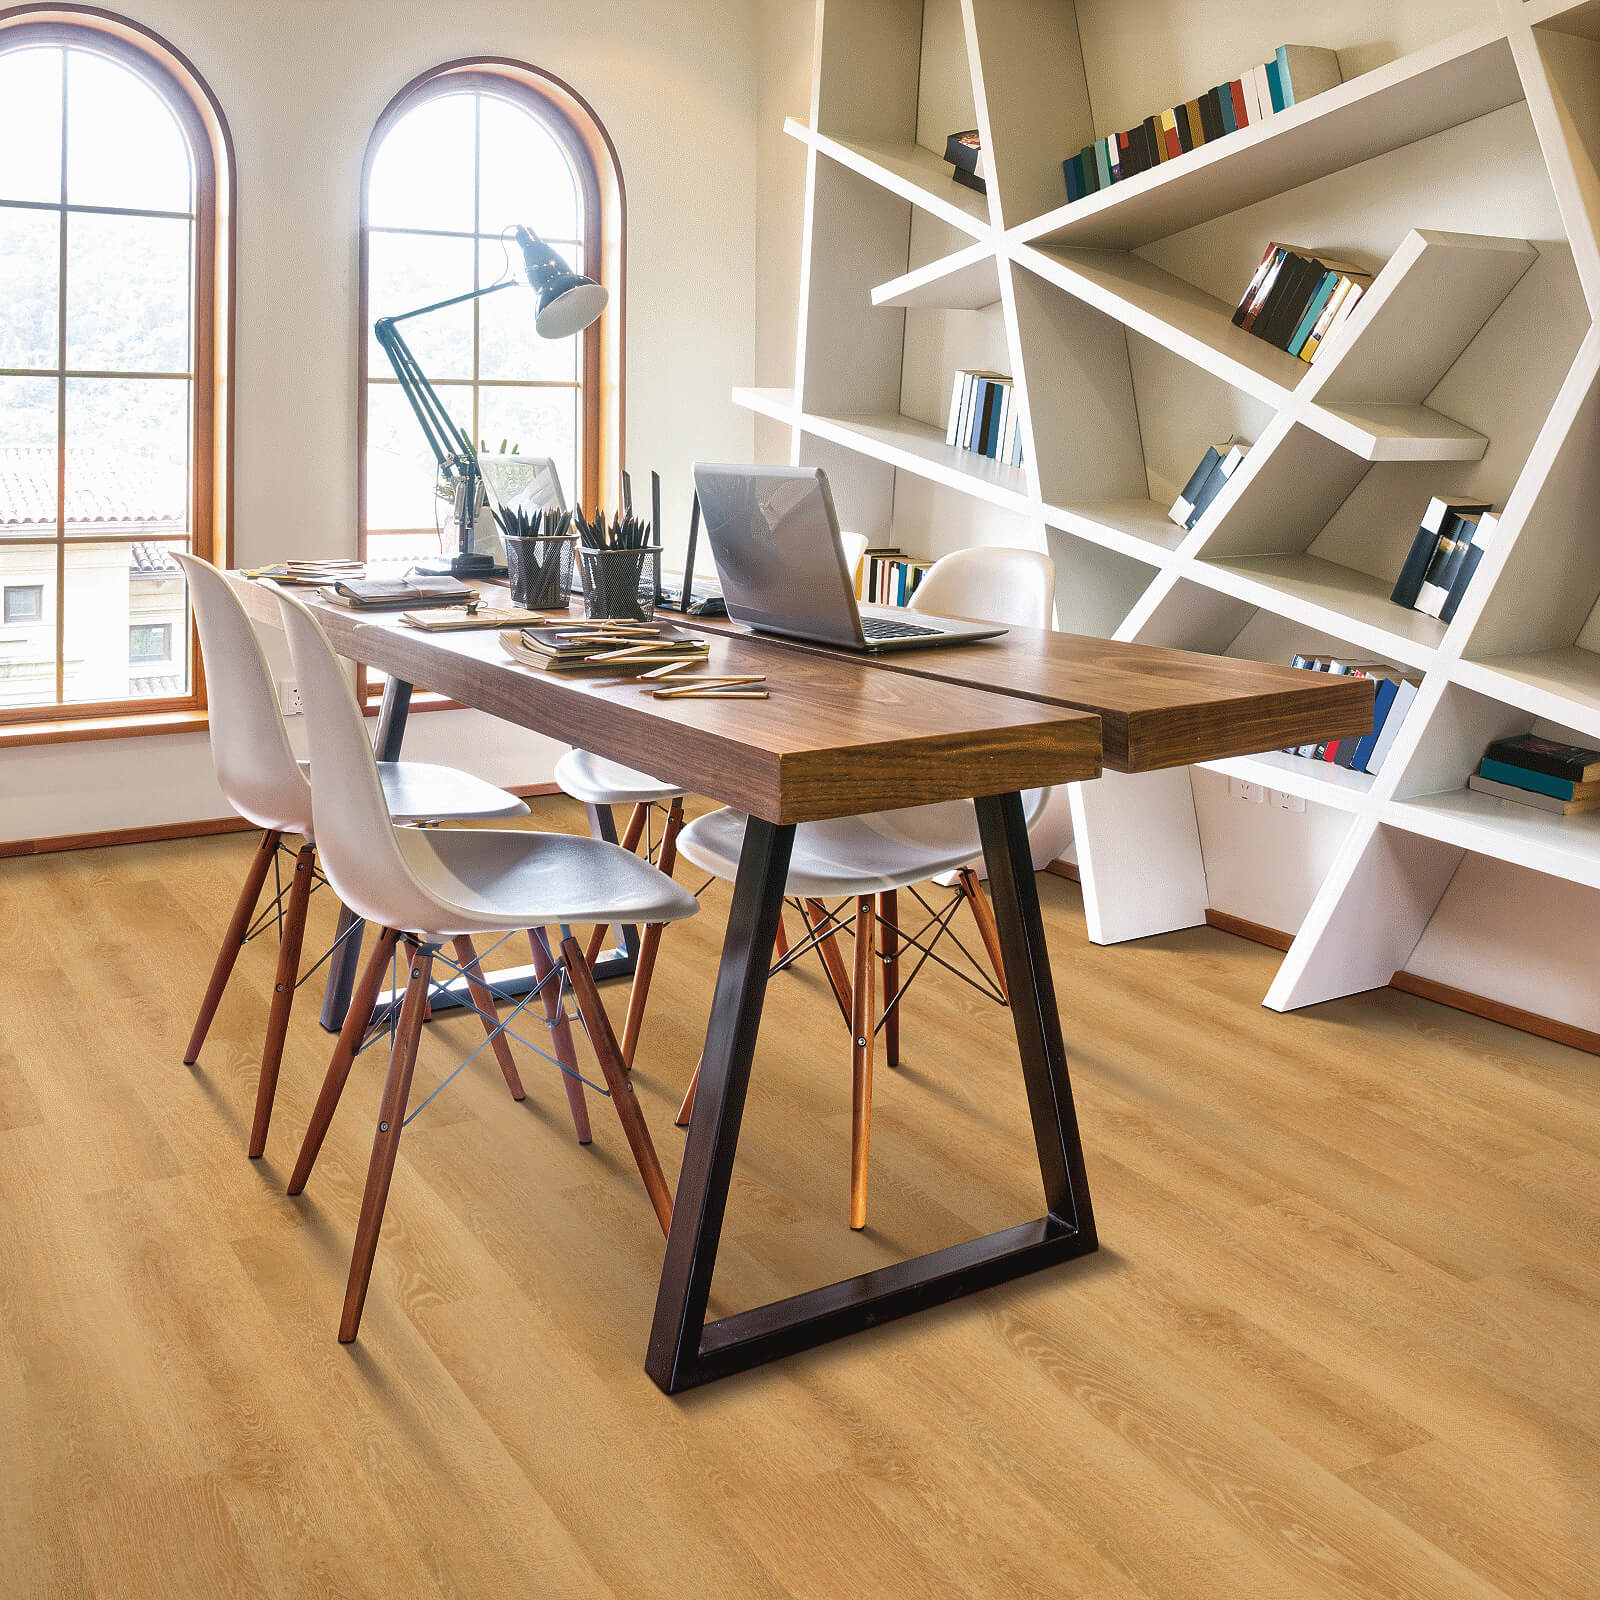 Vinyl flooring for study room | Family Flooring